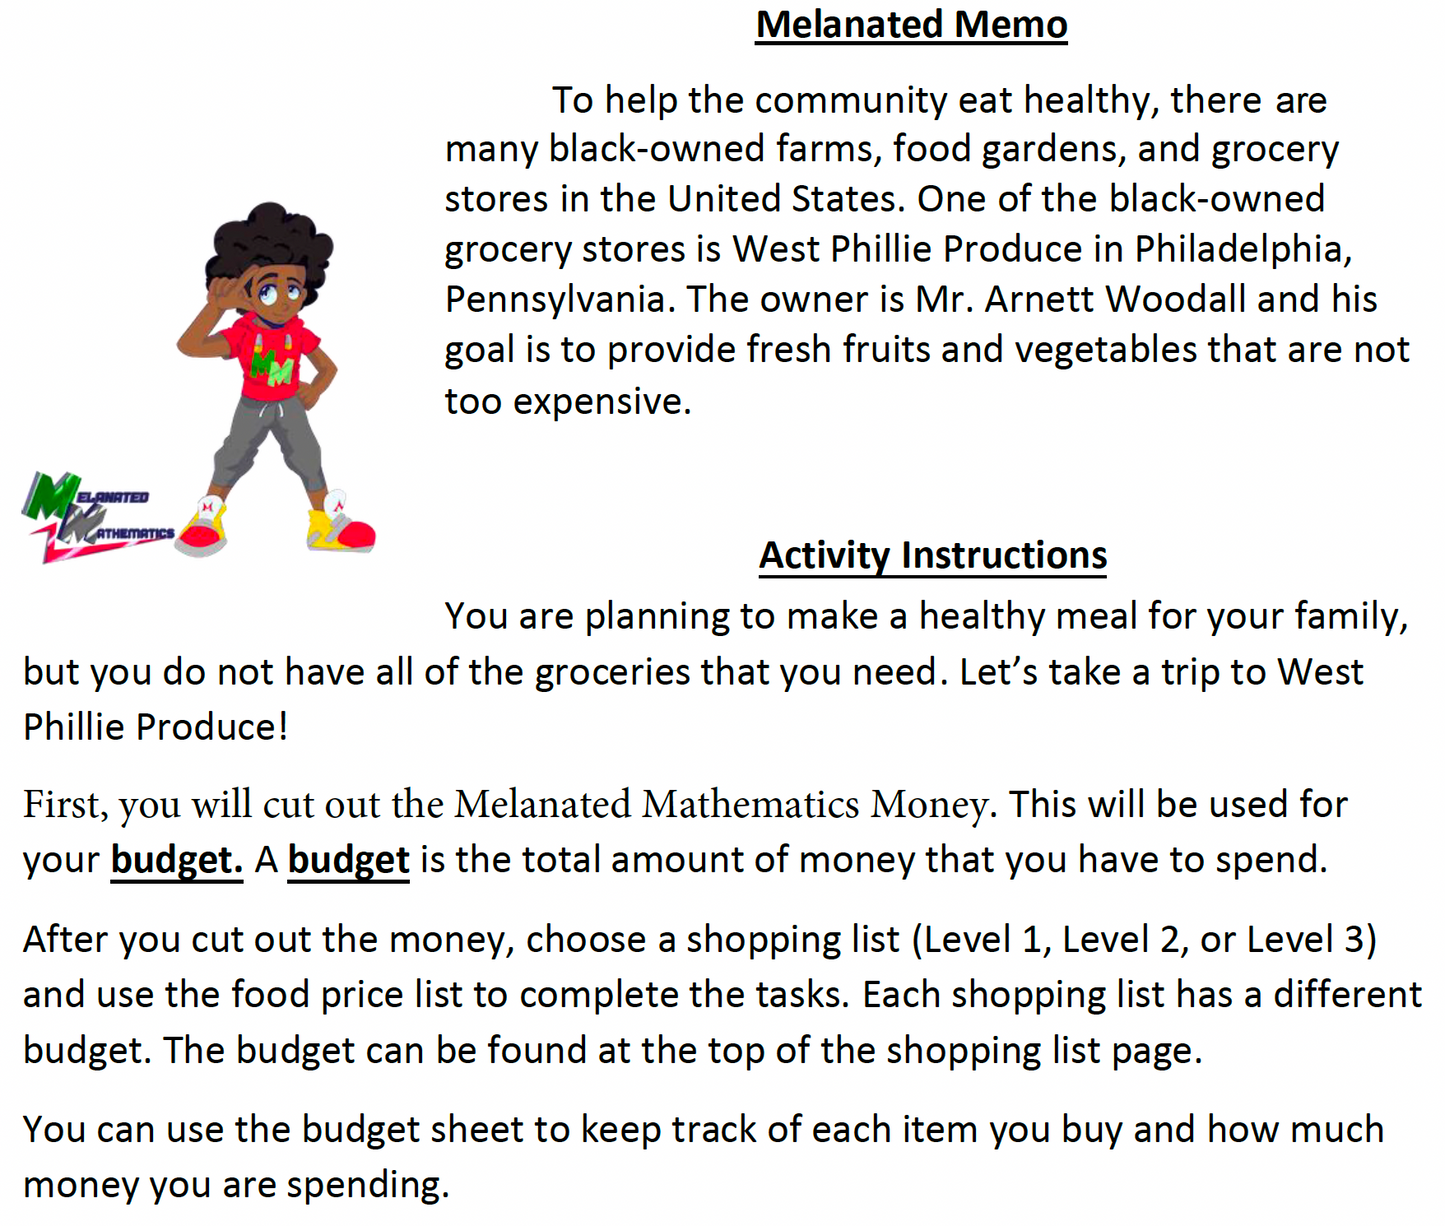 Financial Literacy Bundle - LEVEL 1 (ages 5-7)